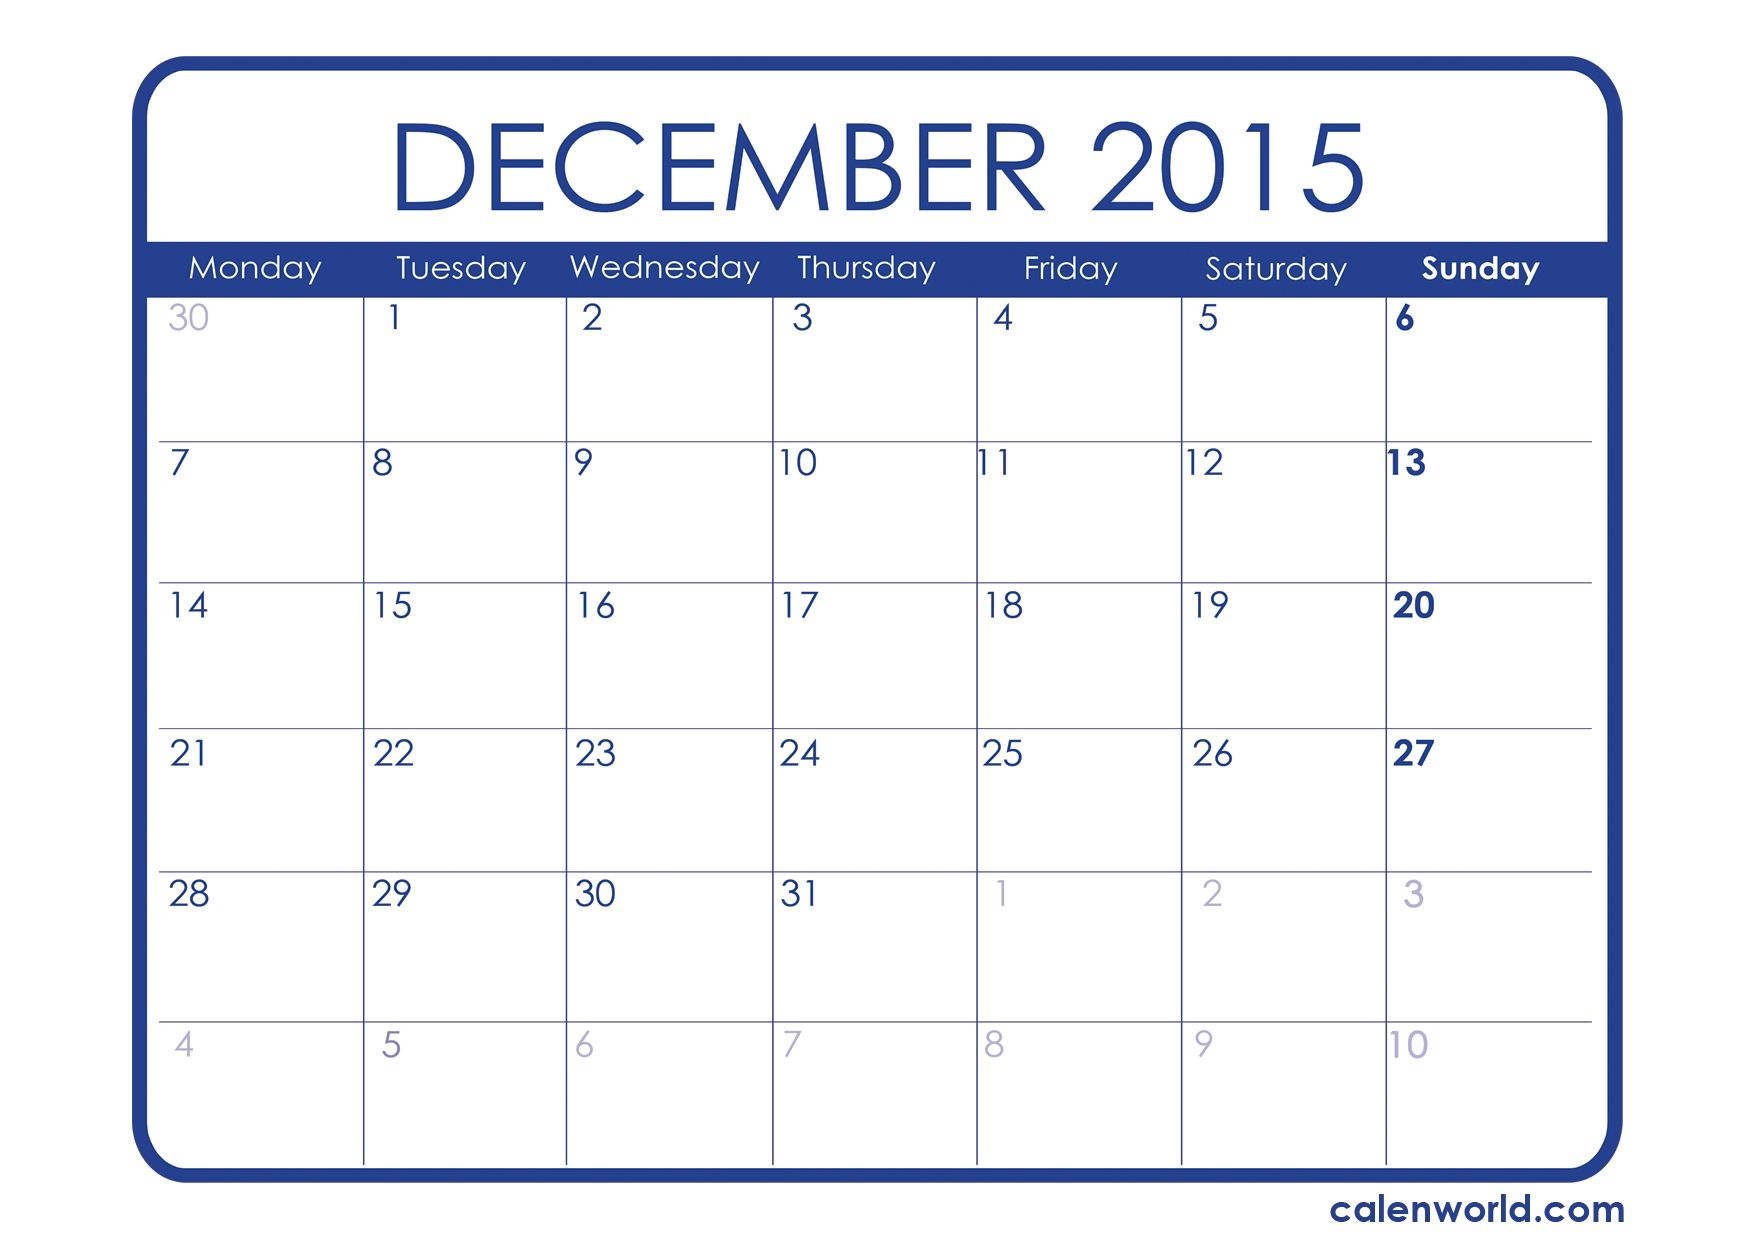 Monthly Calendar No Weekends | Calendar Creator Wiki Printable Monthly Calendar With No Weekends